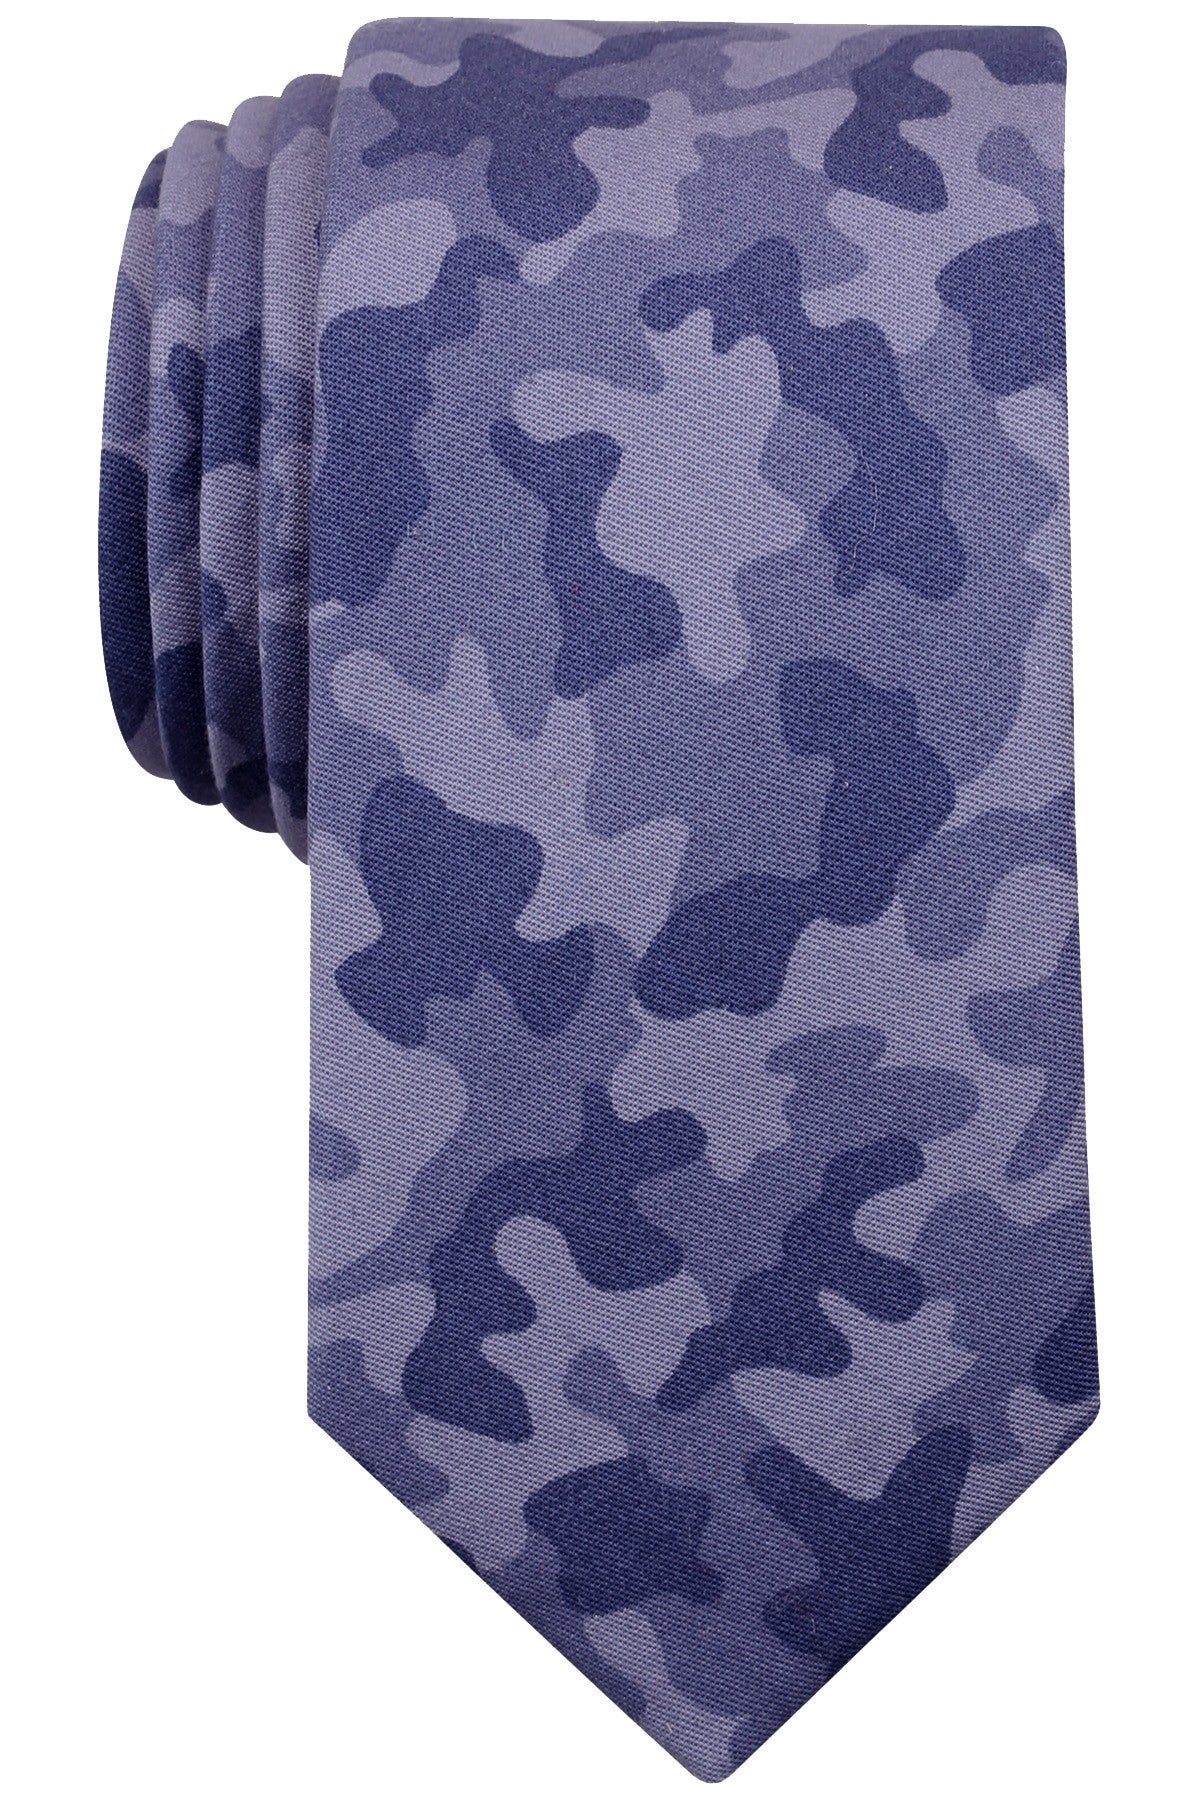 BAR III Navy/Indigo Camouflage Print Skinny Tie